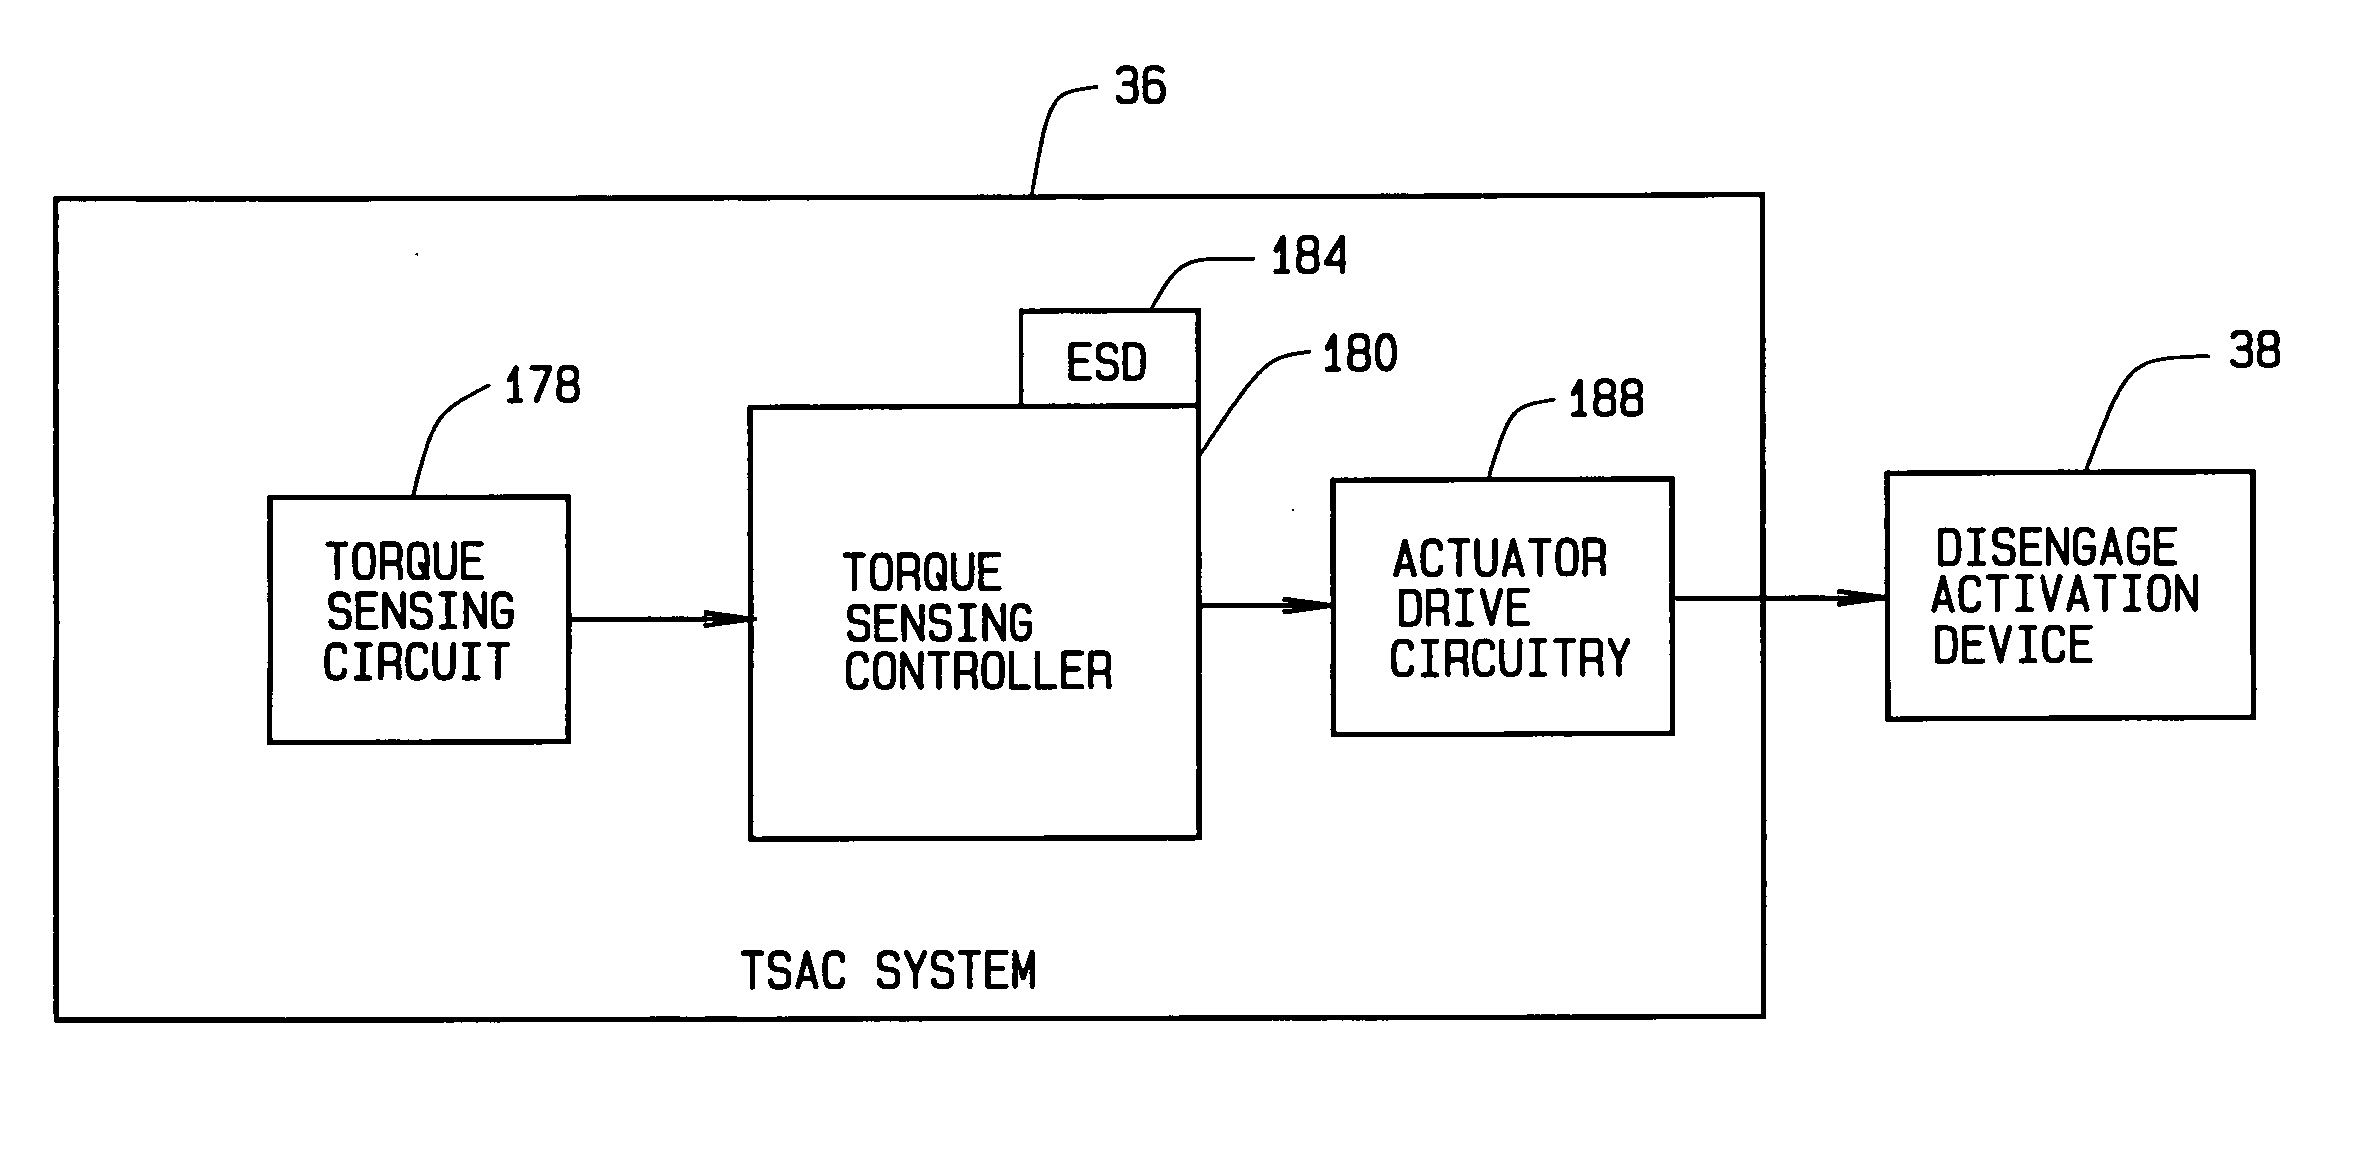 Fault-tolerant electromechanical actuator having a torque sensing control system